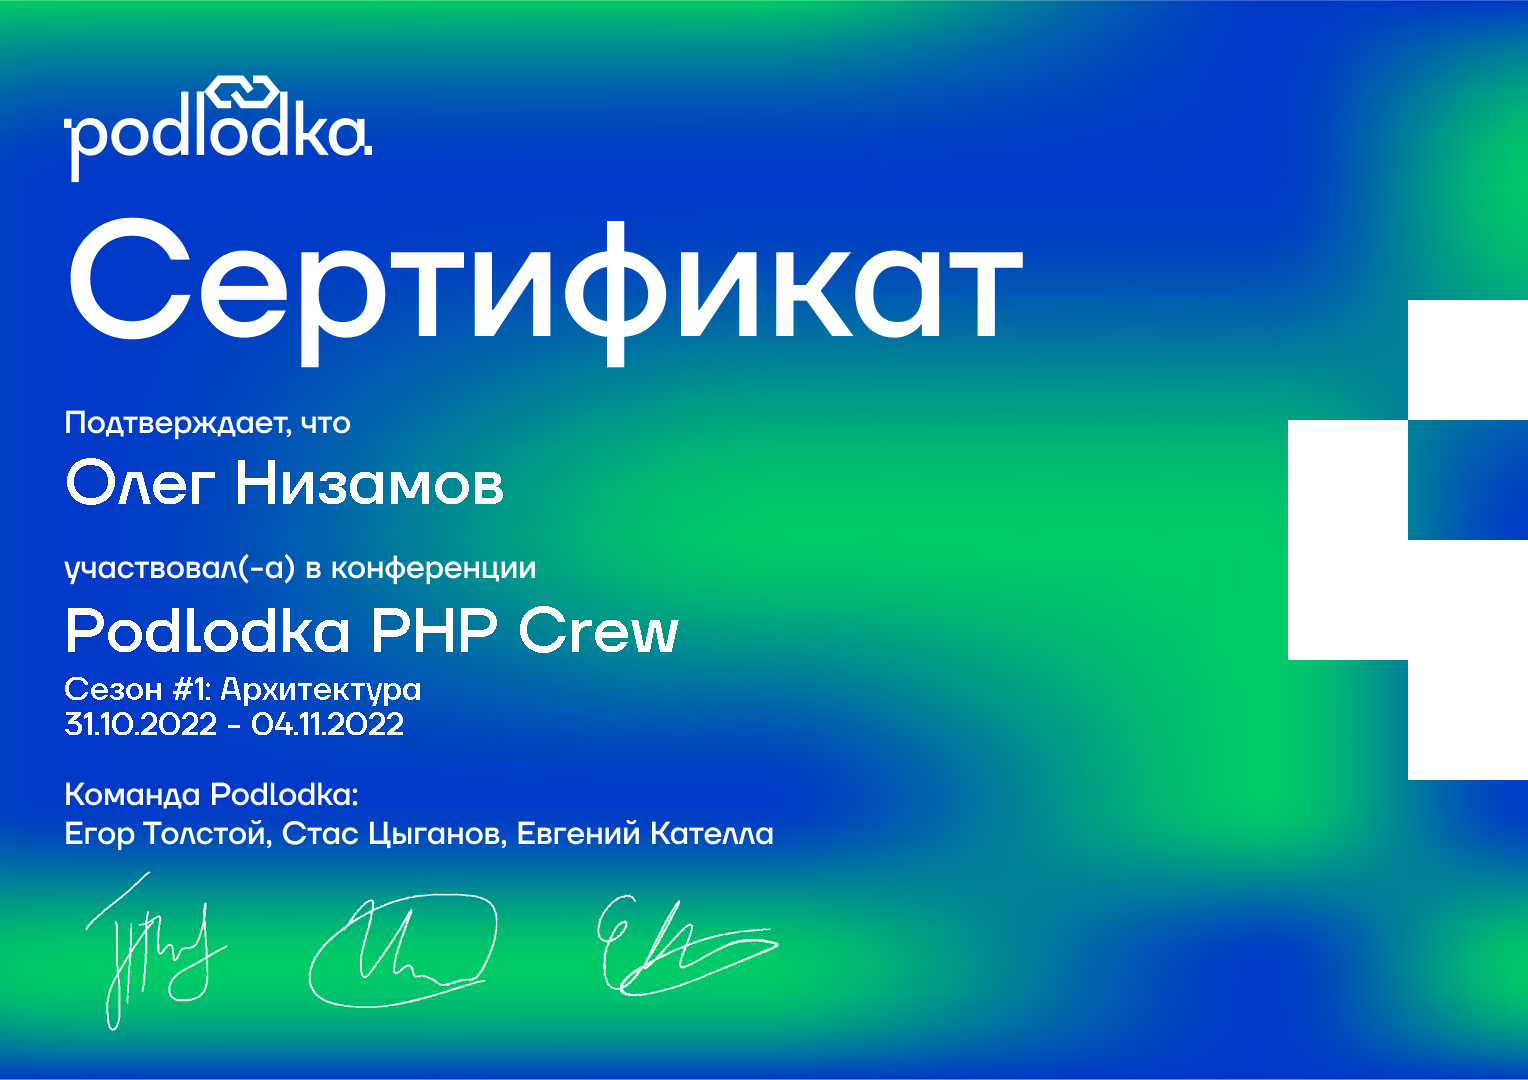 Podlodka PHP Crew